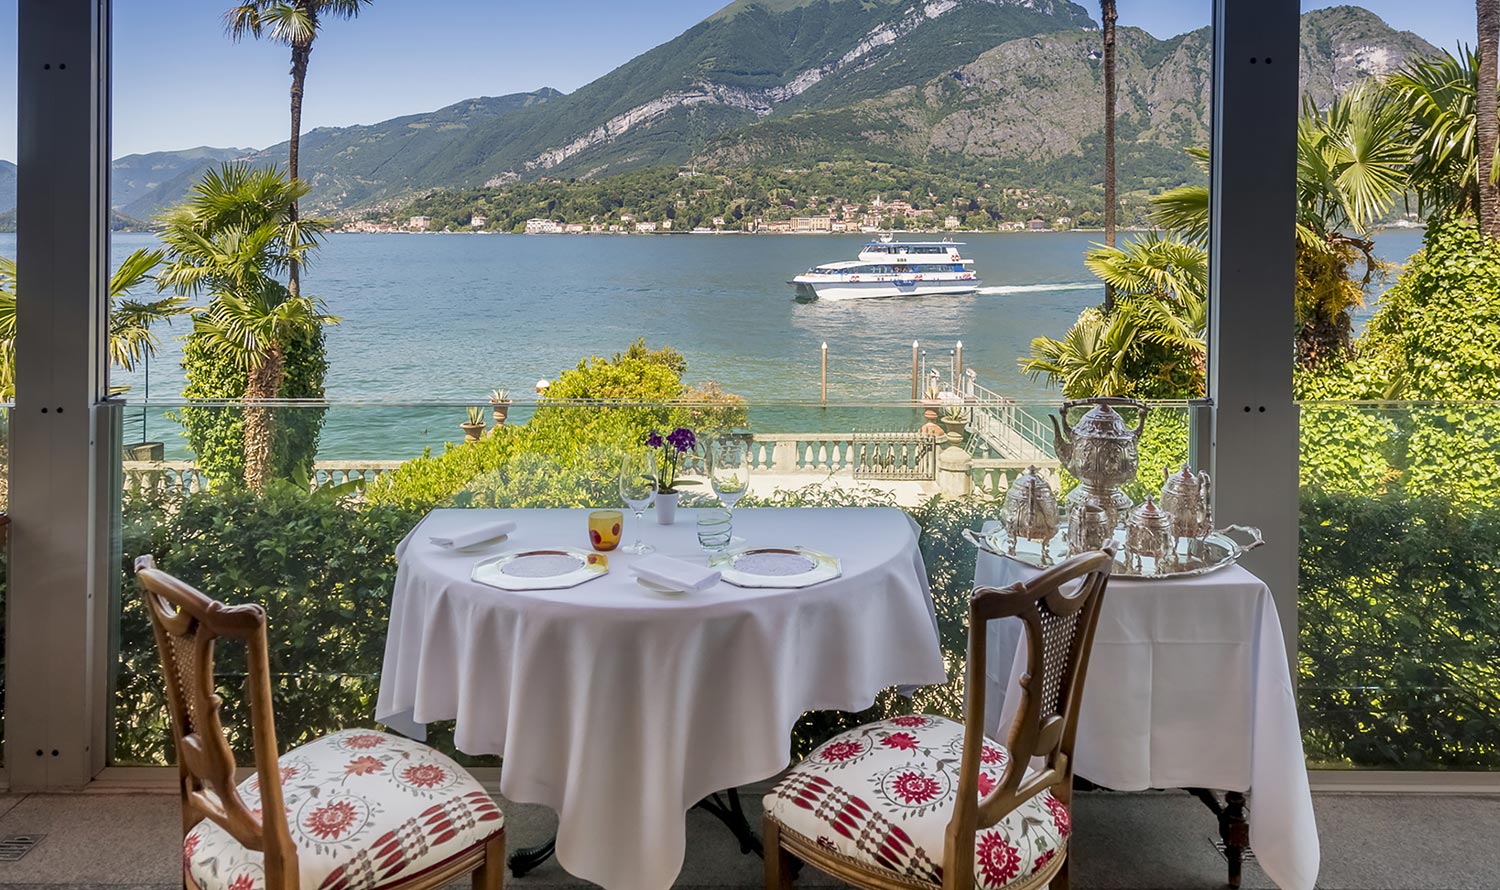 Mistral Restaurant - Grand Hotel Villa Serbelloni